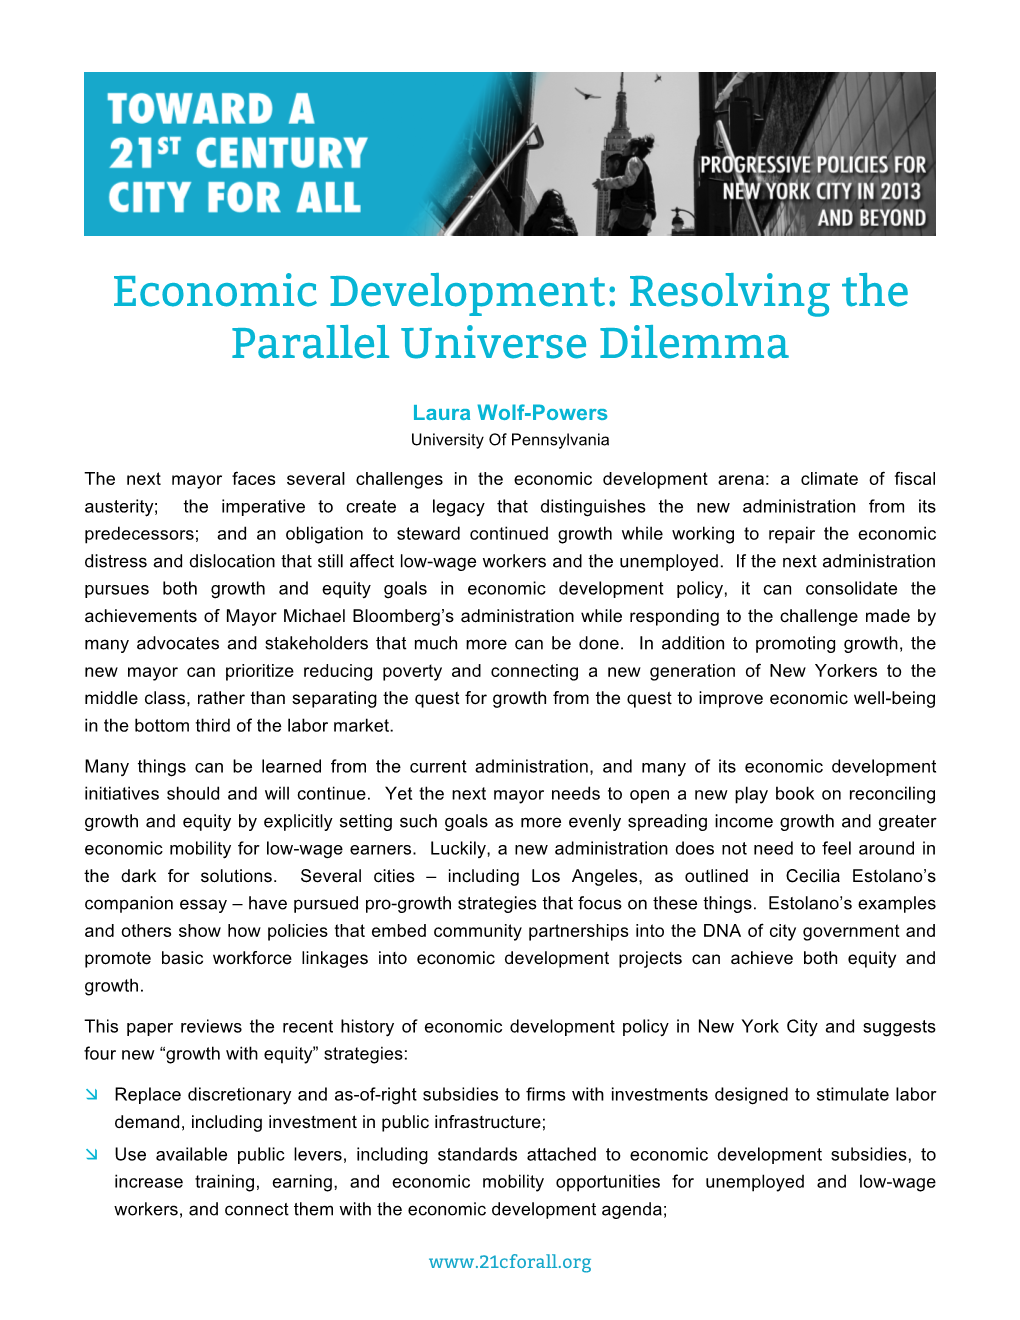 Economic Development: Resolving the Parallel Universe Dilemma